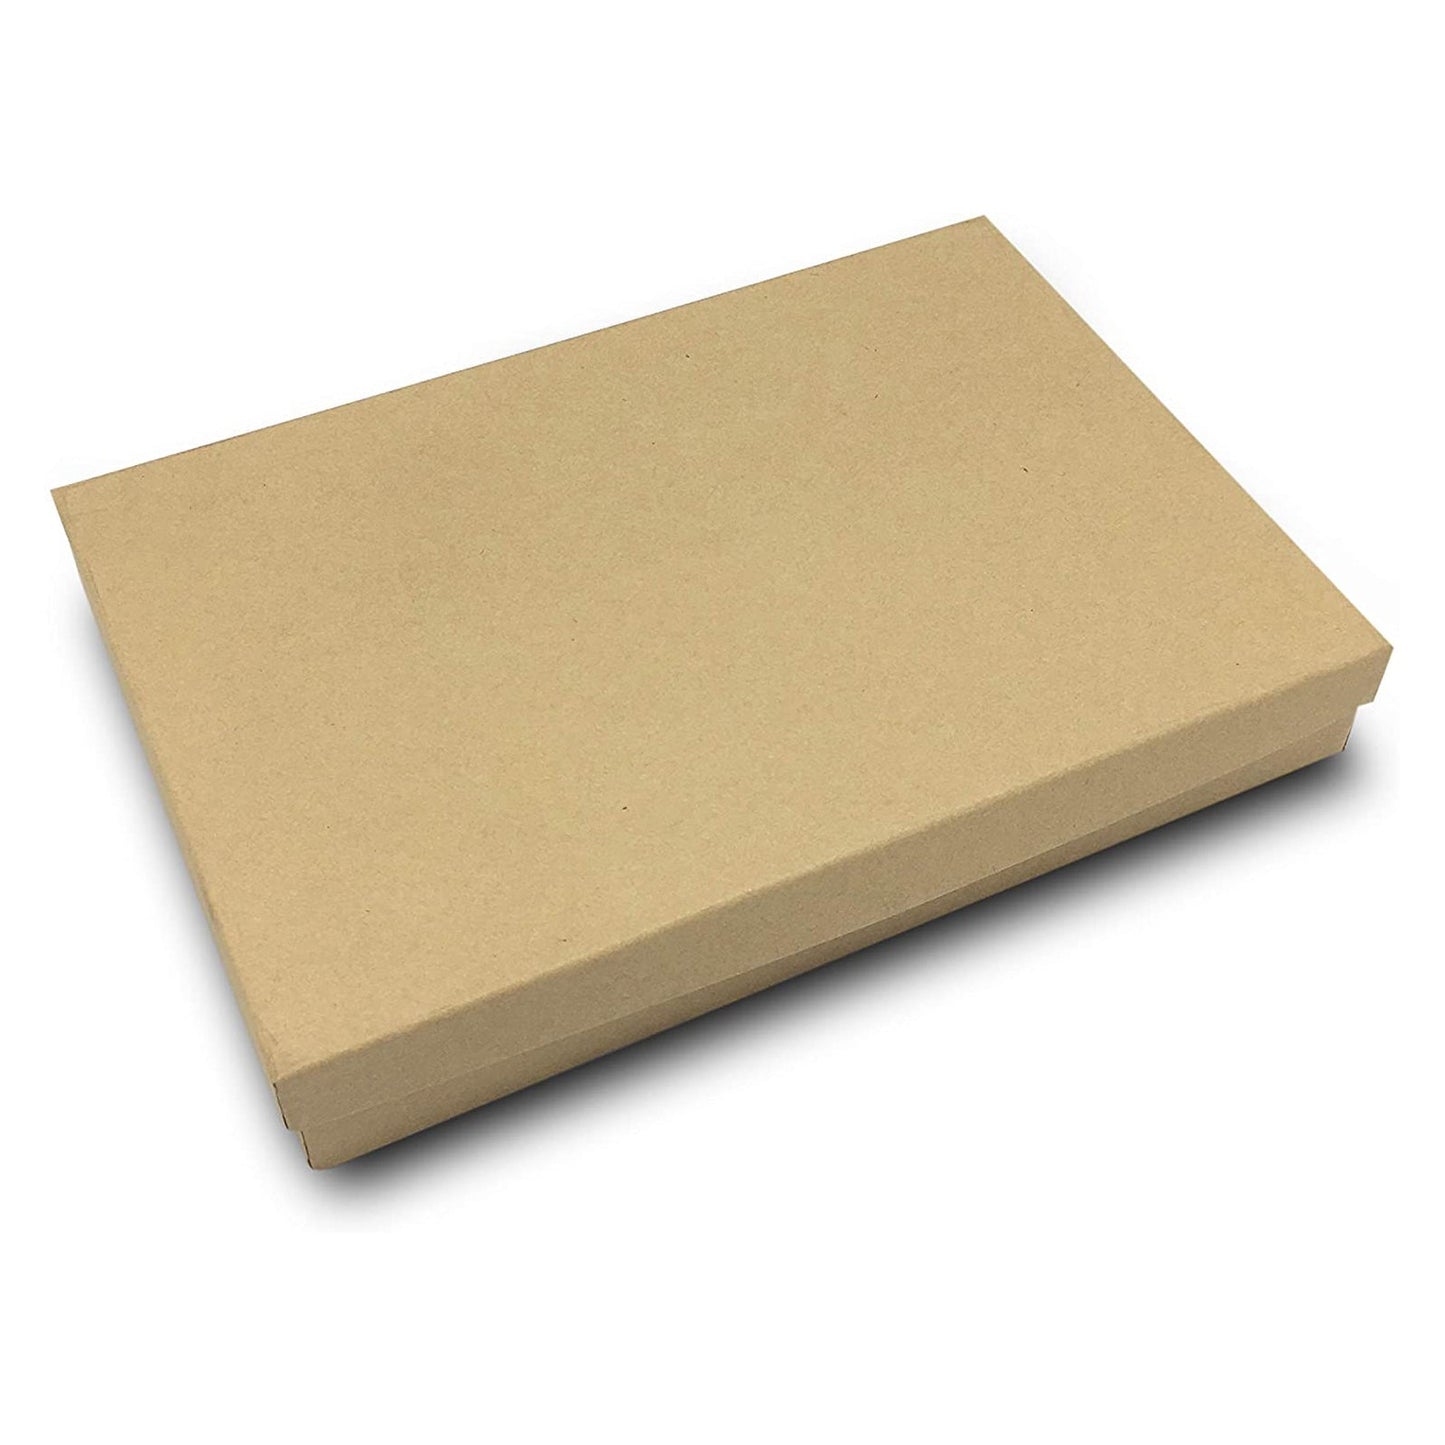 #K53 - 5 3/8" x 3 7/8" x 1" Kraft Cotton Filled Paper Box